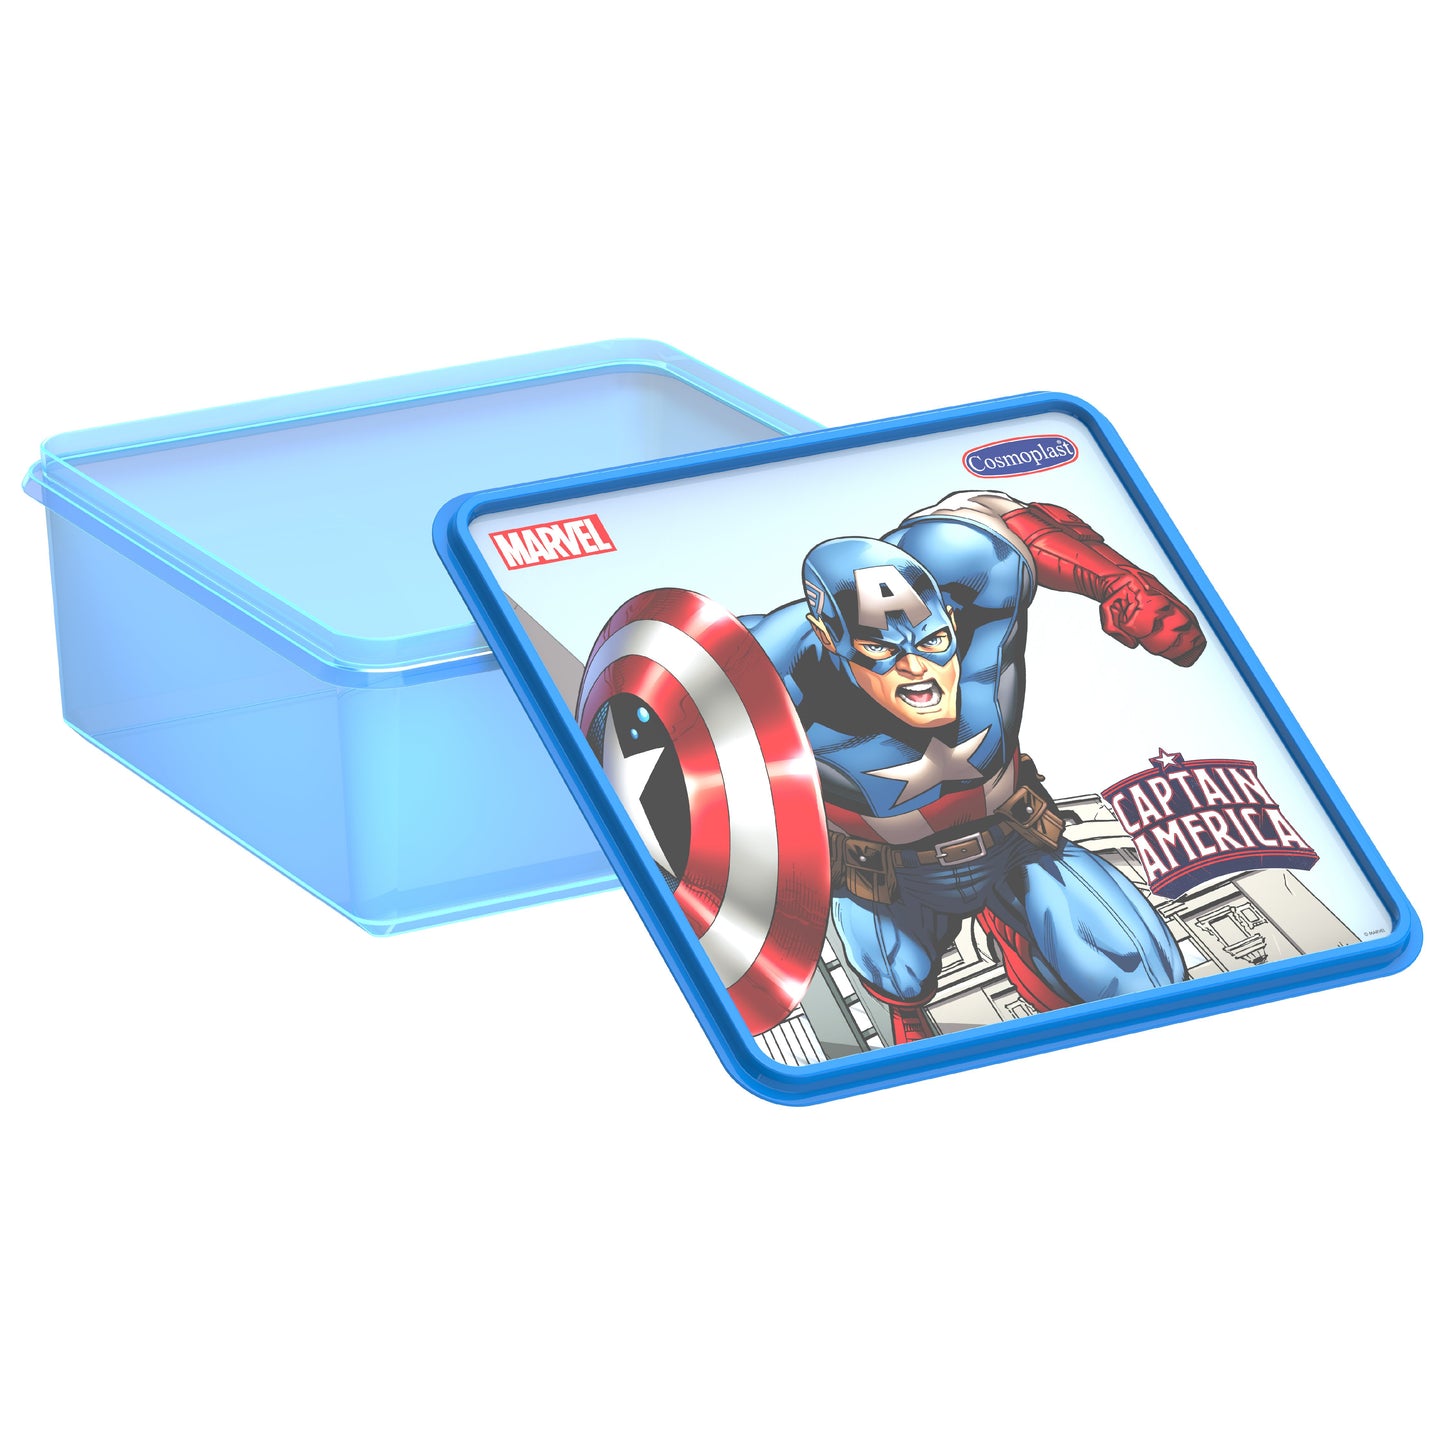 Cosmoplast Disney Marvel Avengers Storage Box 10 Liters